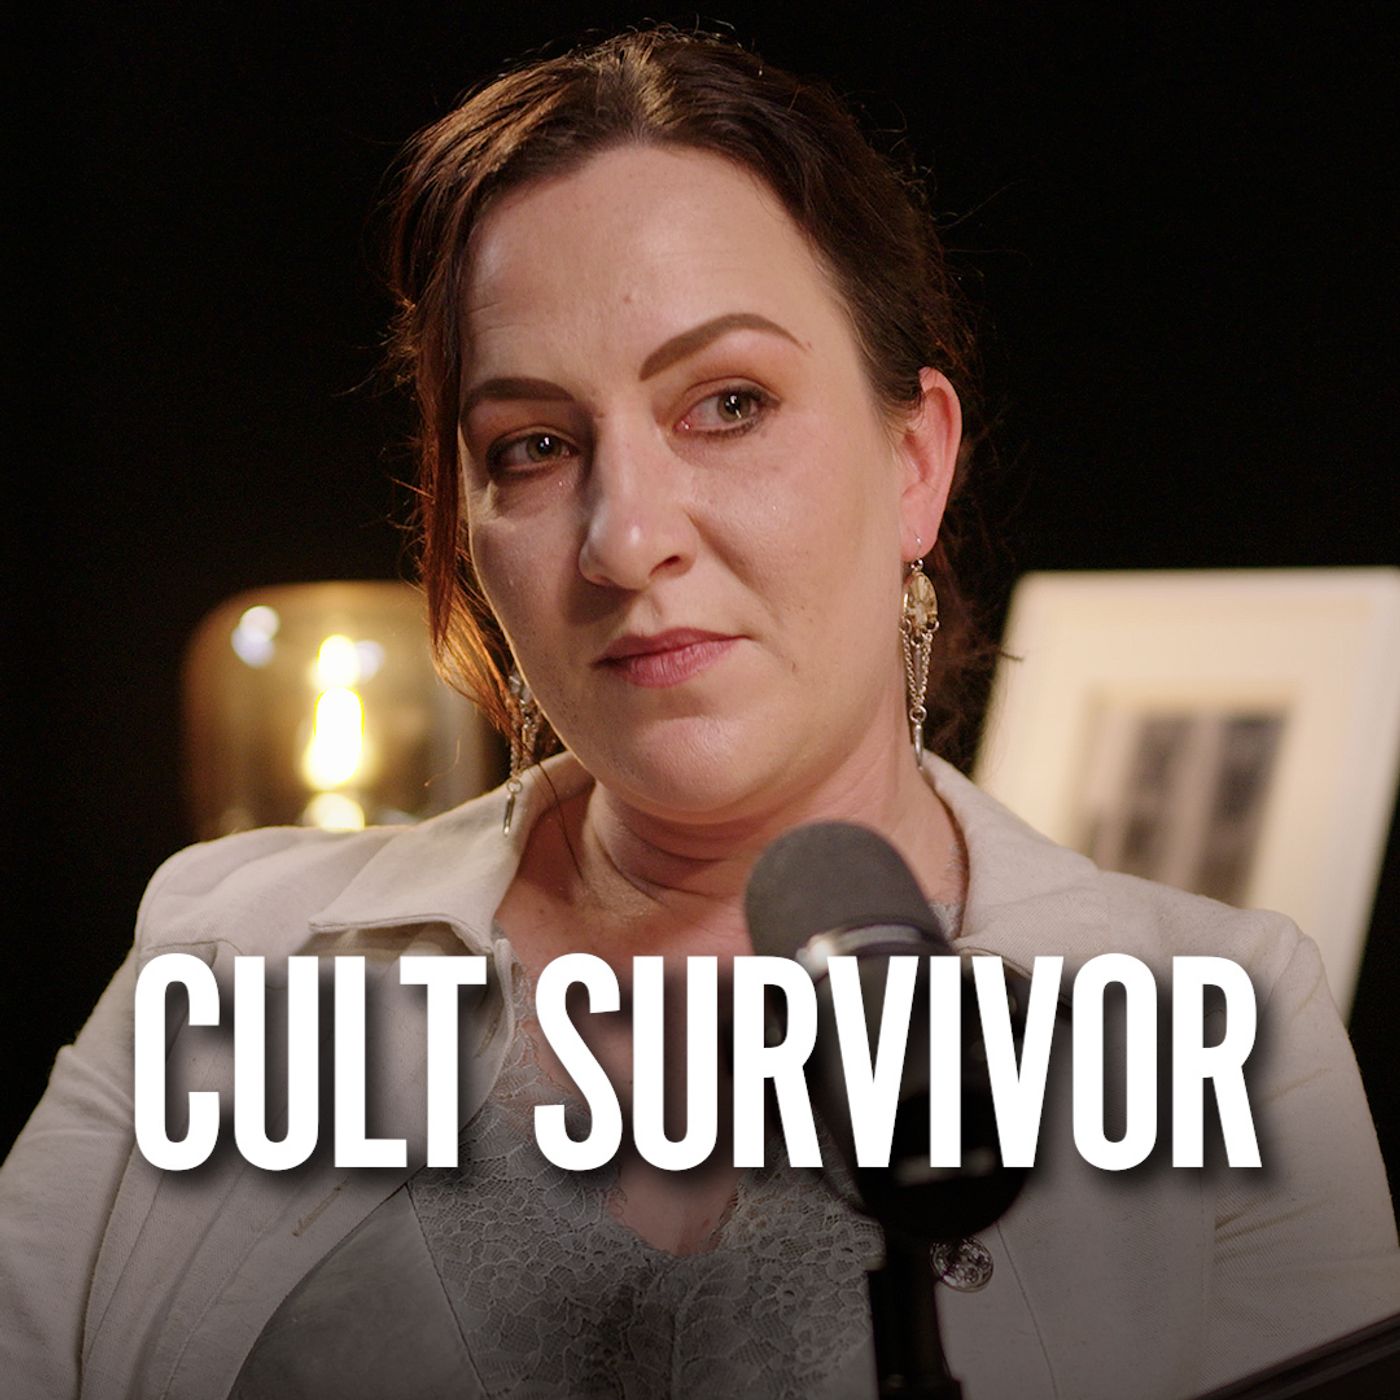 S2 Ep11: Cult Survivor: Born & Raised In An International Cult